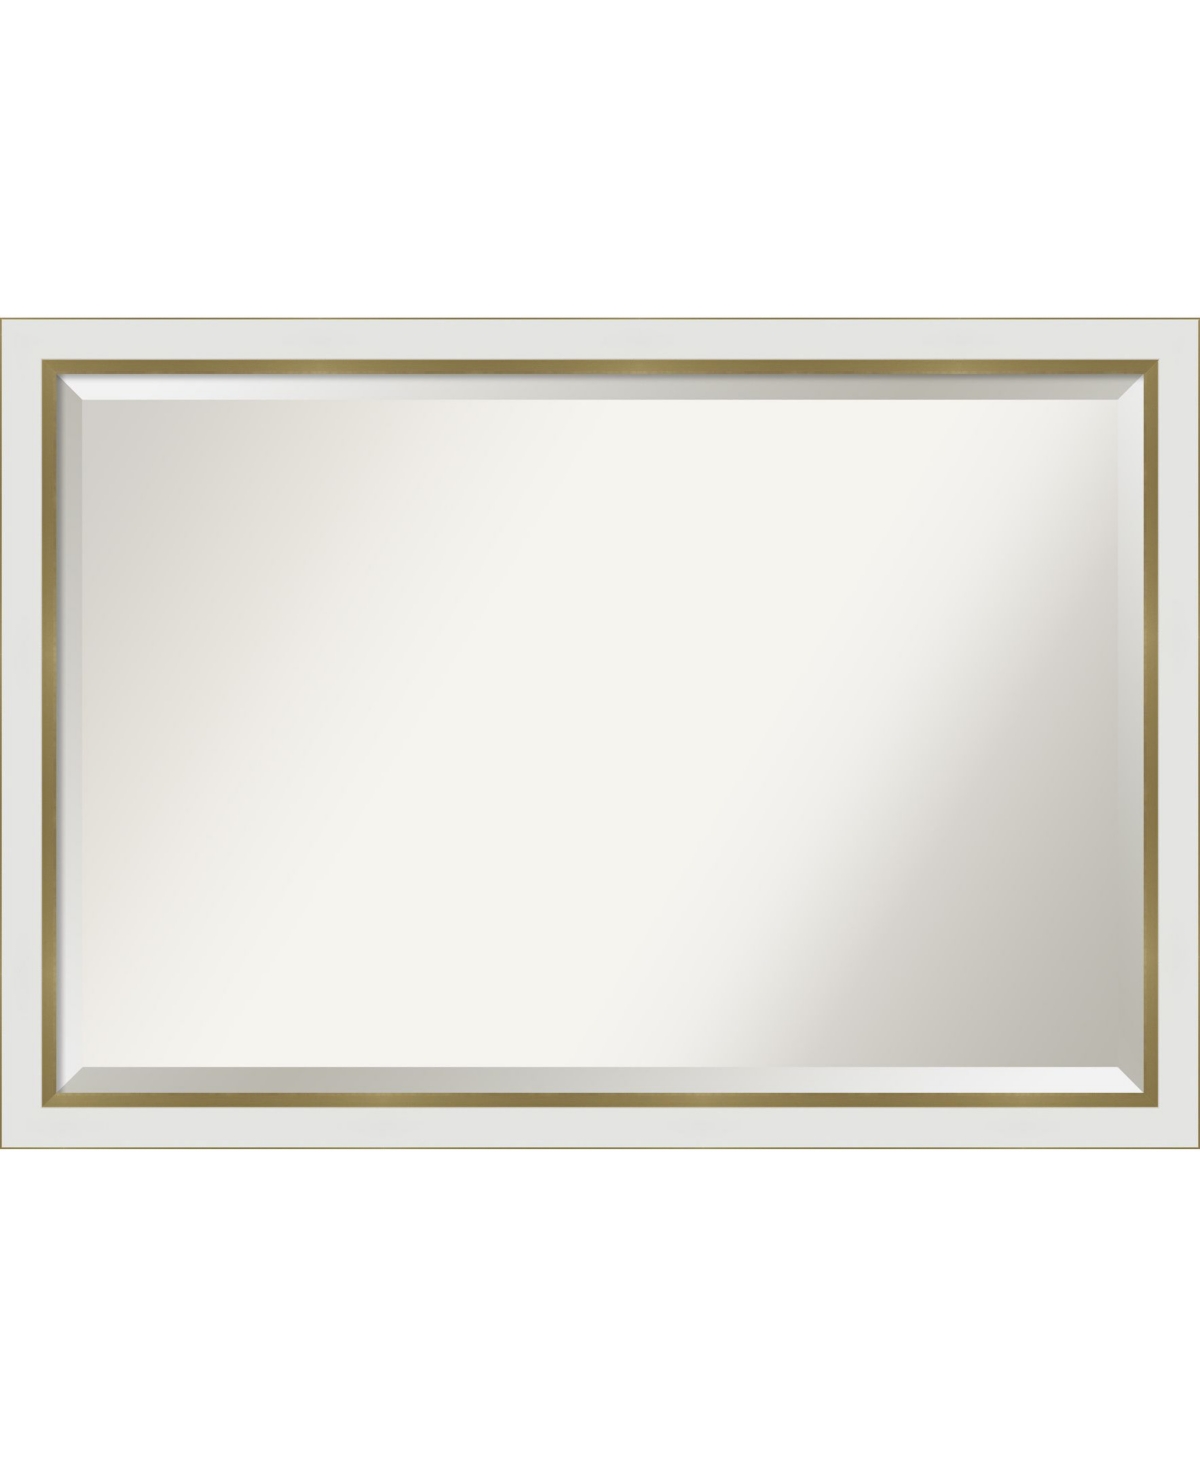 Eva Gold-tone Framed Bathroom Vanity Wall Mirror, 39.12" x 27.12" - White